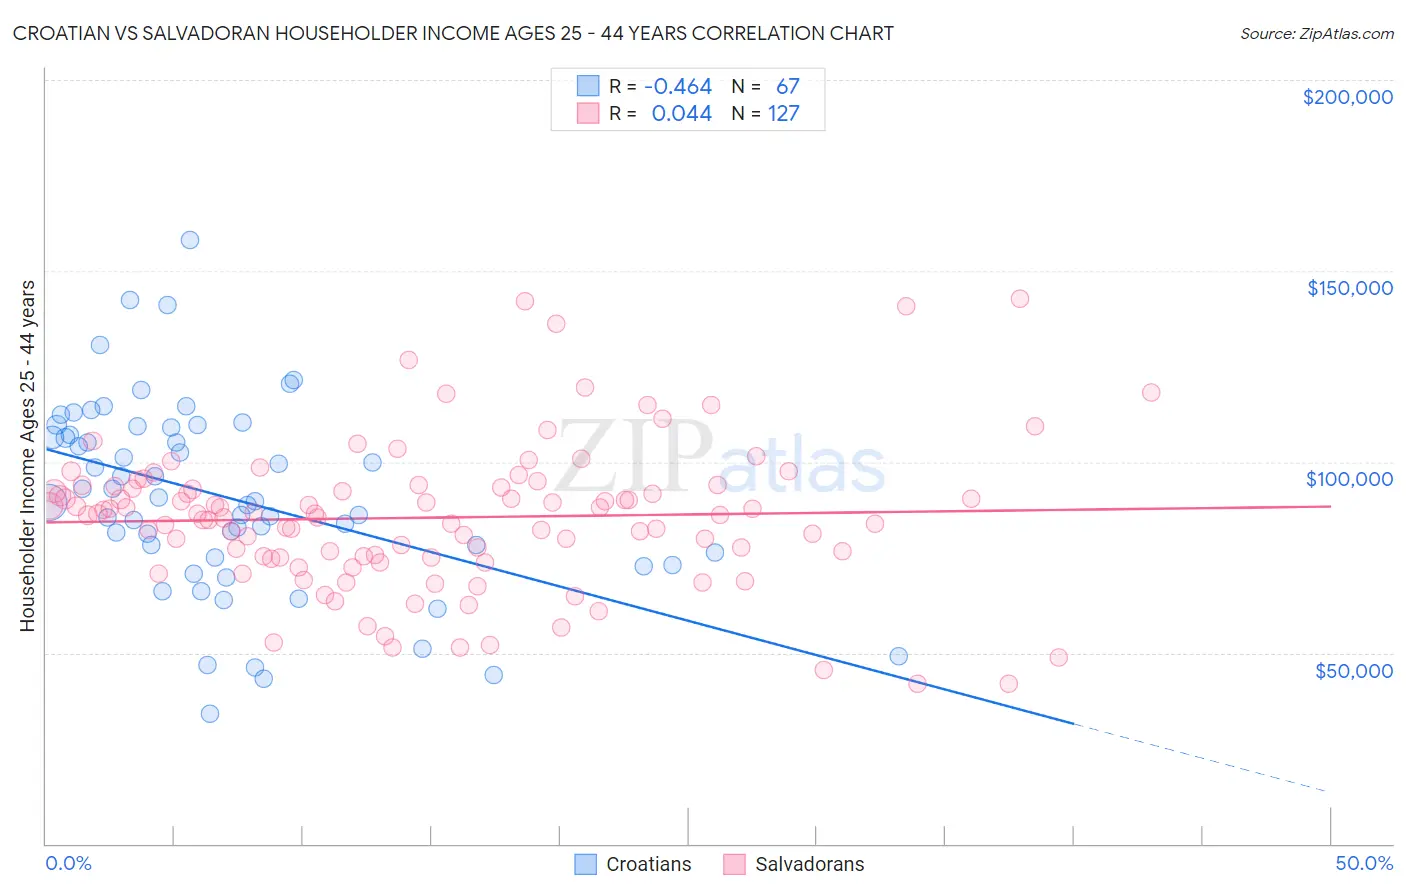 Croatian vs Salvadoran Householder Income Ages 25 - 44 years